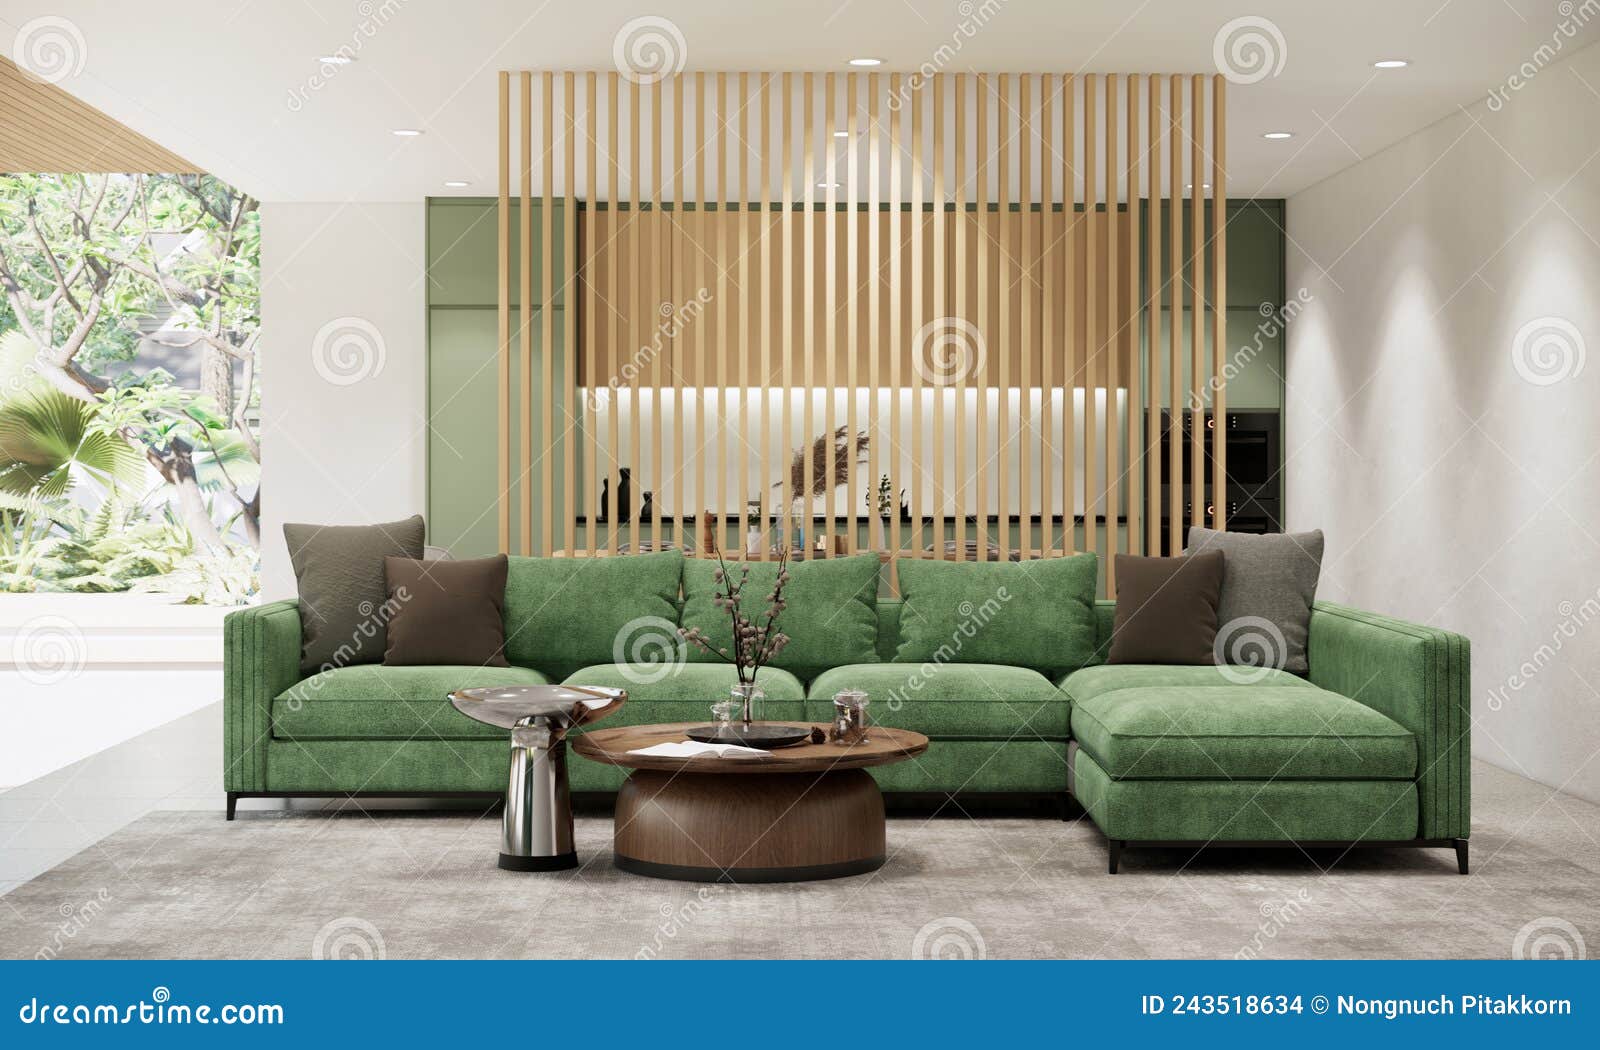 Japandi Style Living Room Interior Design and Decoration. Green ...